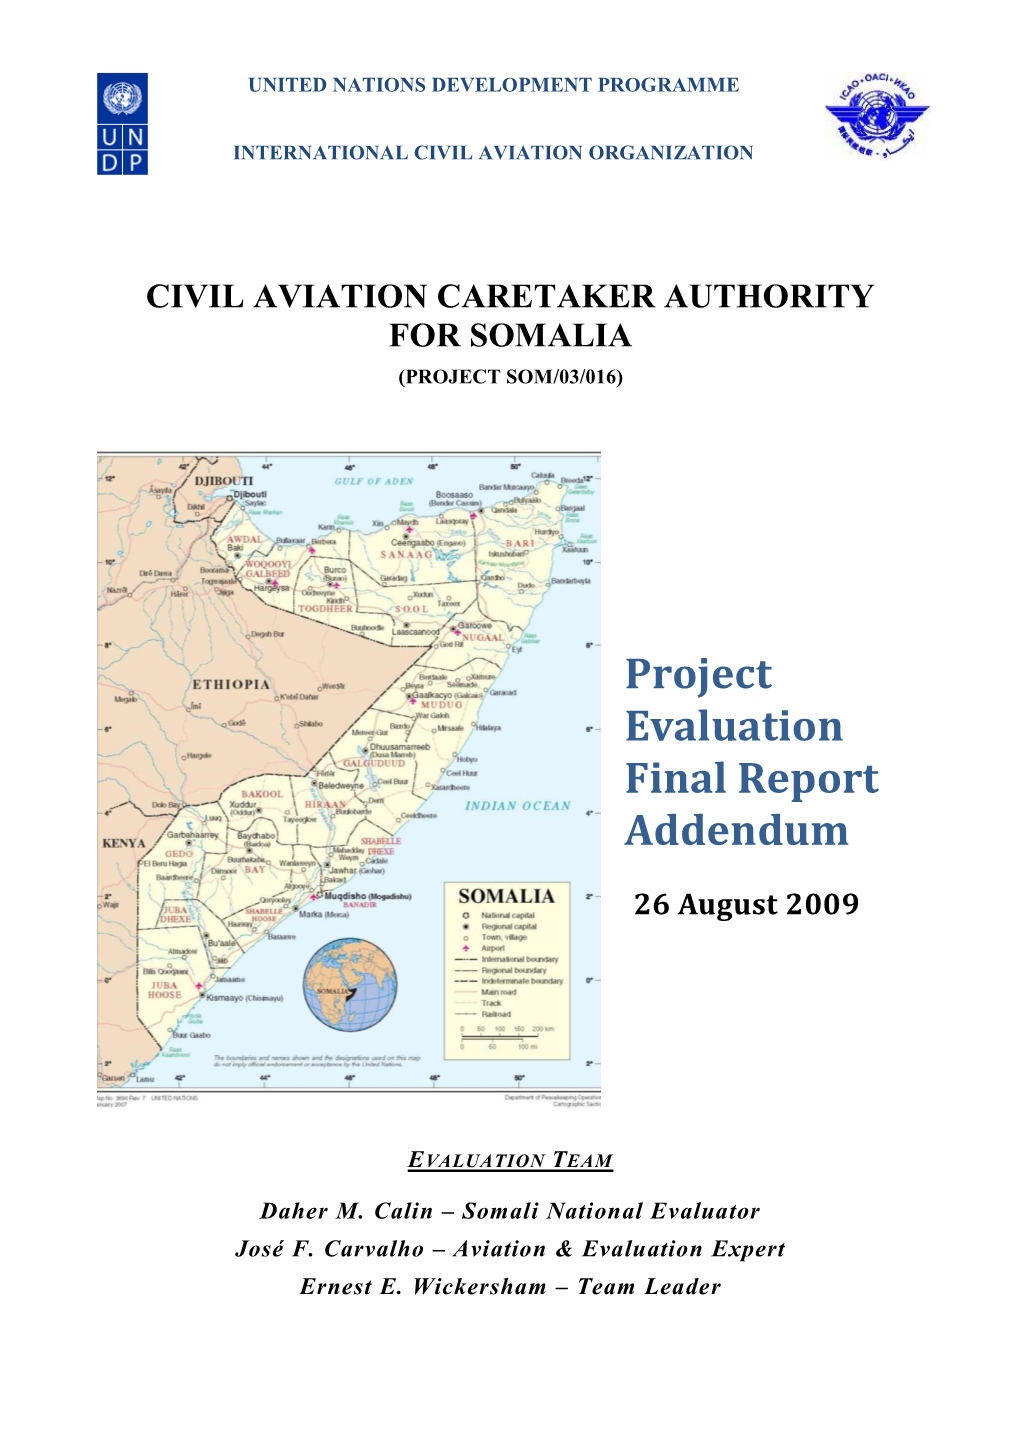 Project Evaluation Final Report Addendum